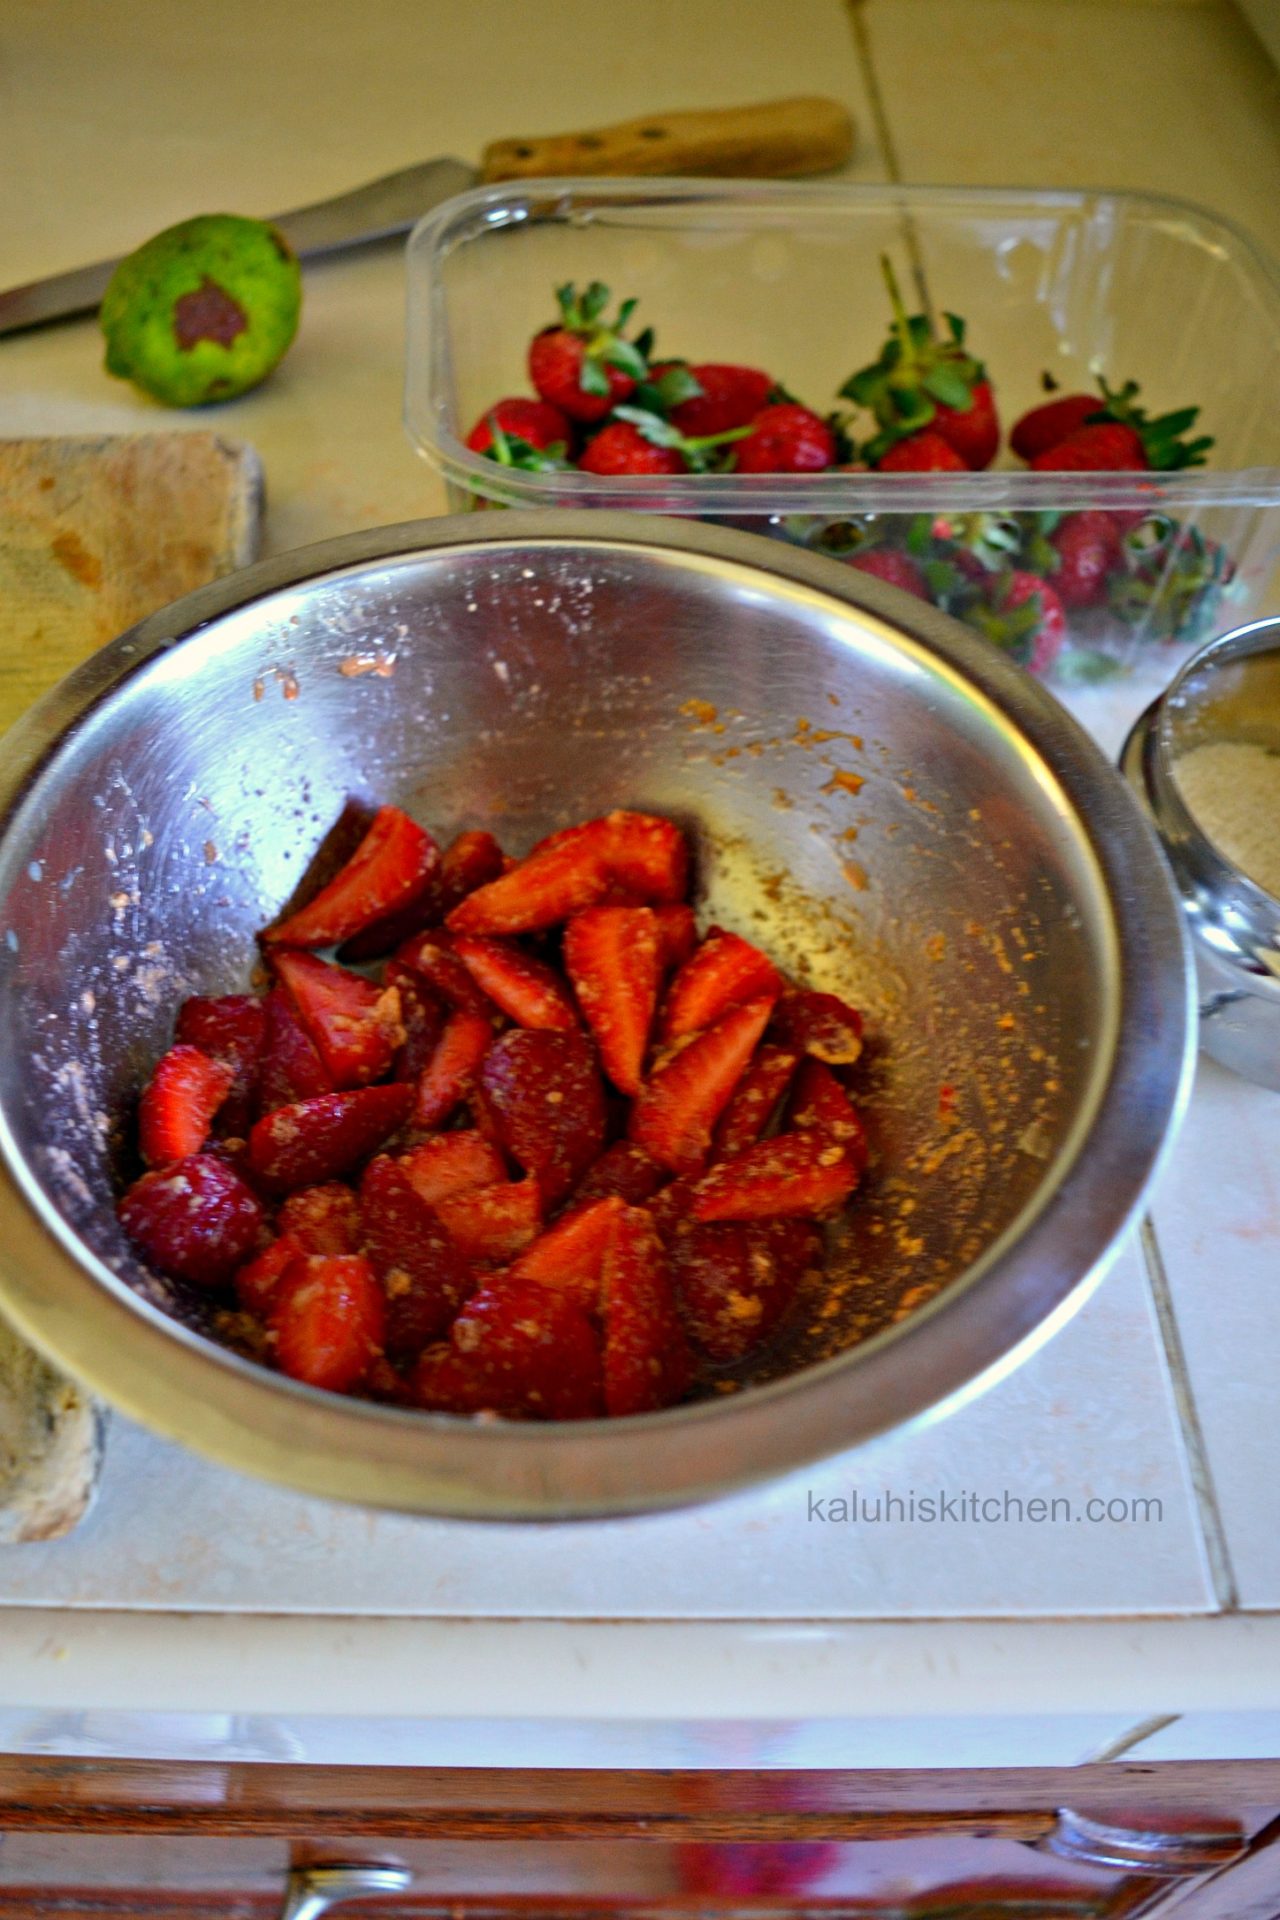 macerated strawberries in amarula, cardamom, limes and brown sugar_kaluhiskitchen.com